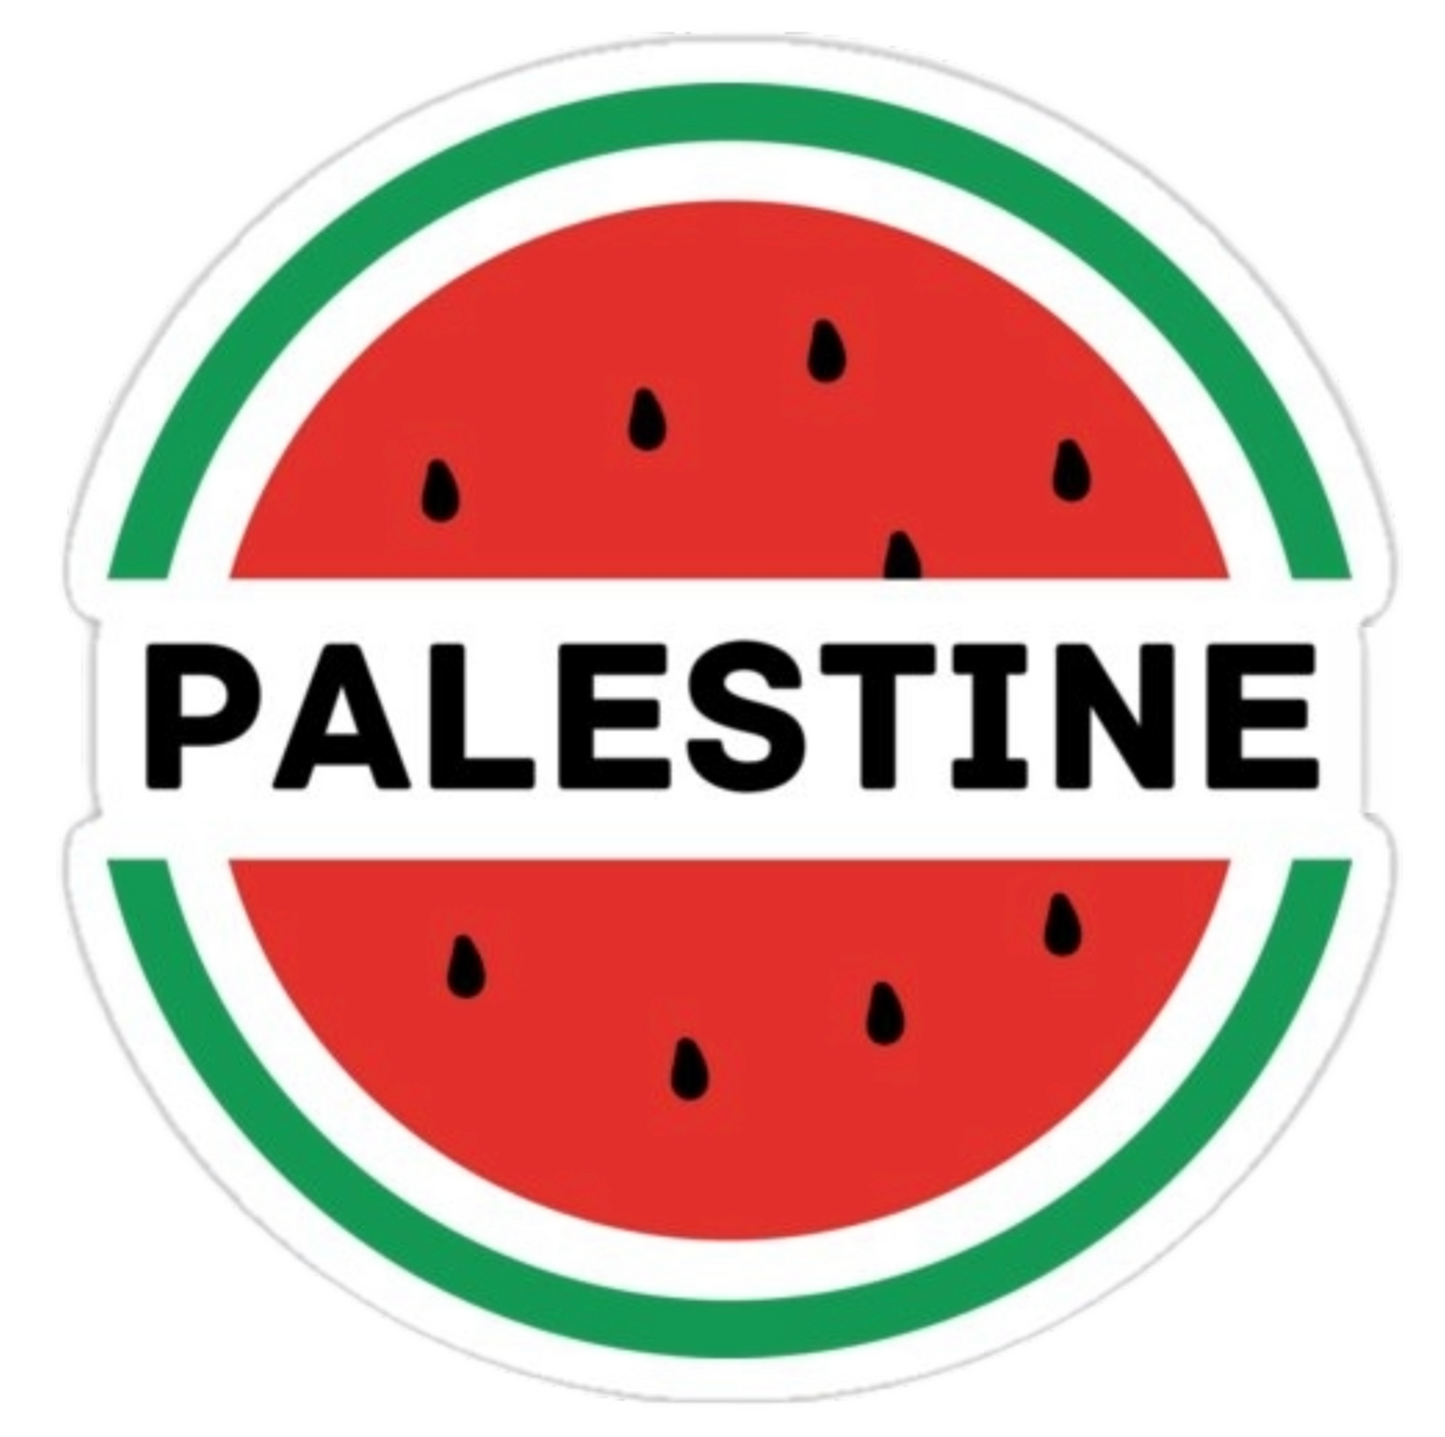 Palestine Watermelon Sticker 9x11 cm 5/10/20/40 Pieces